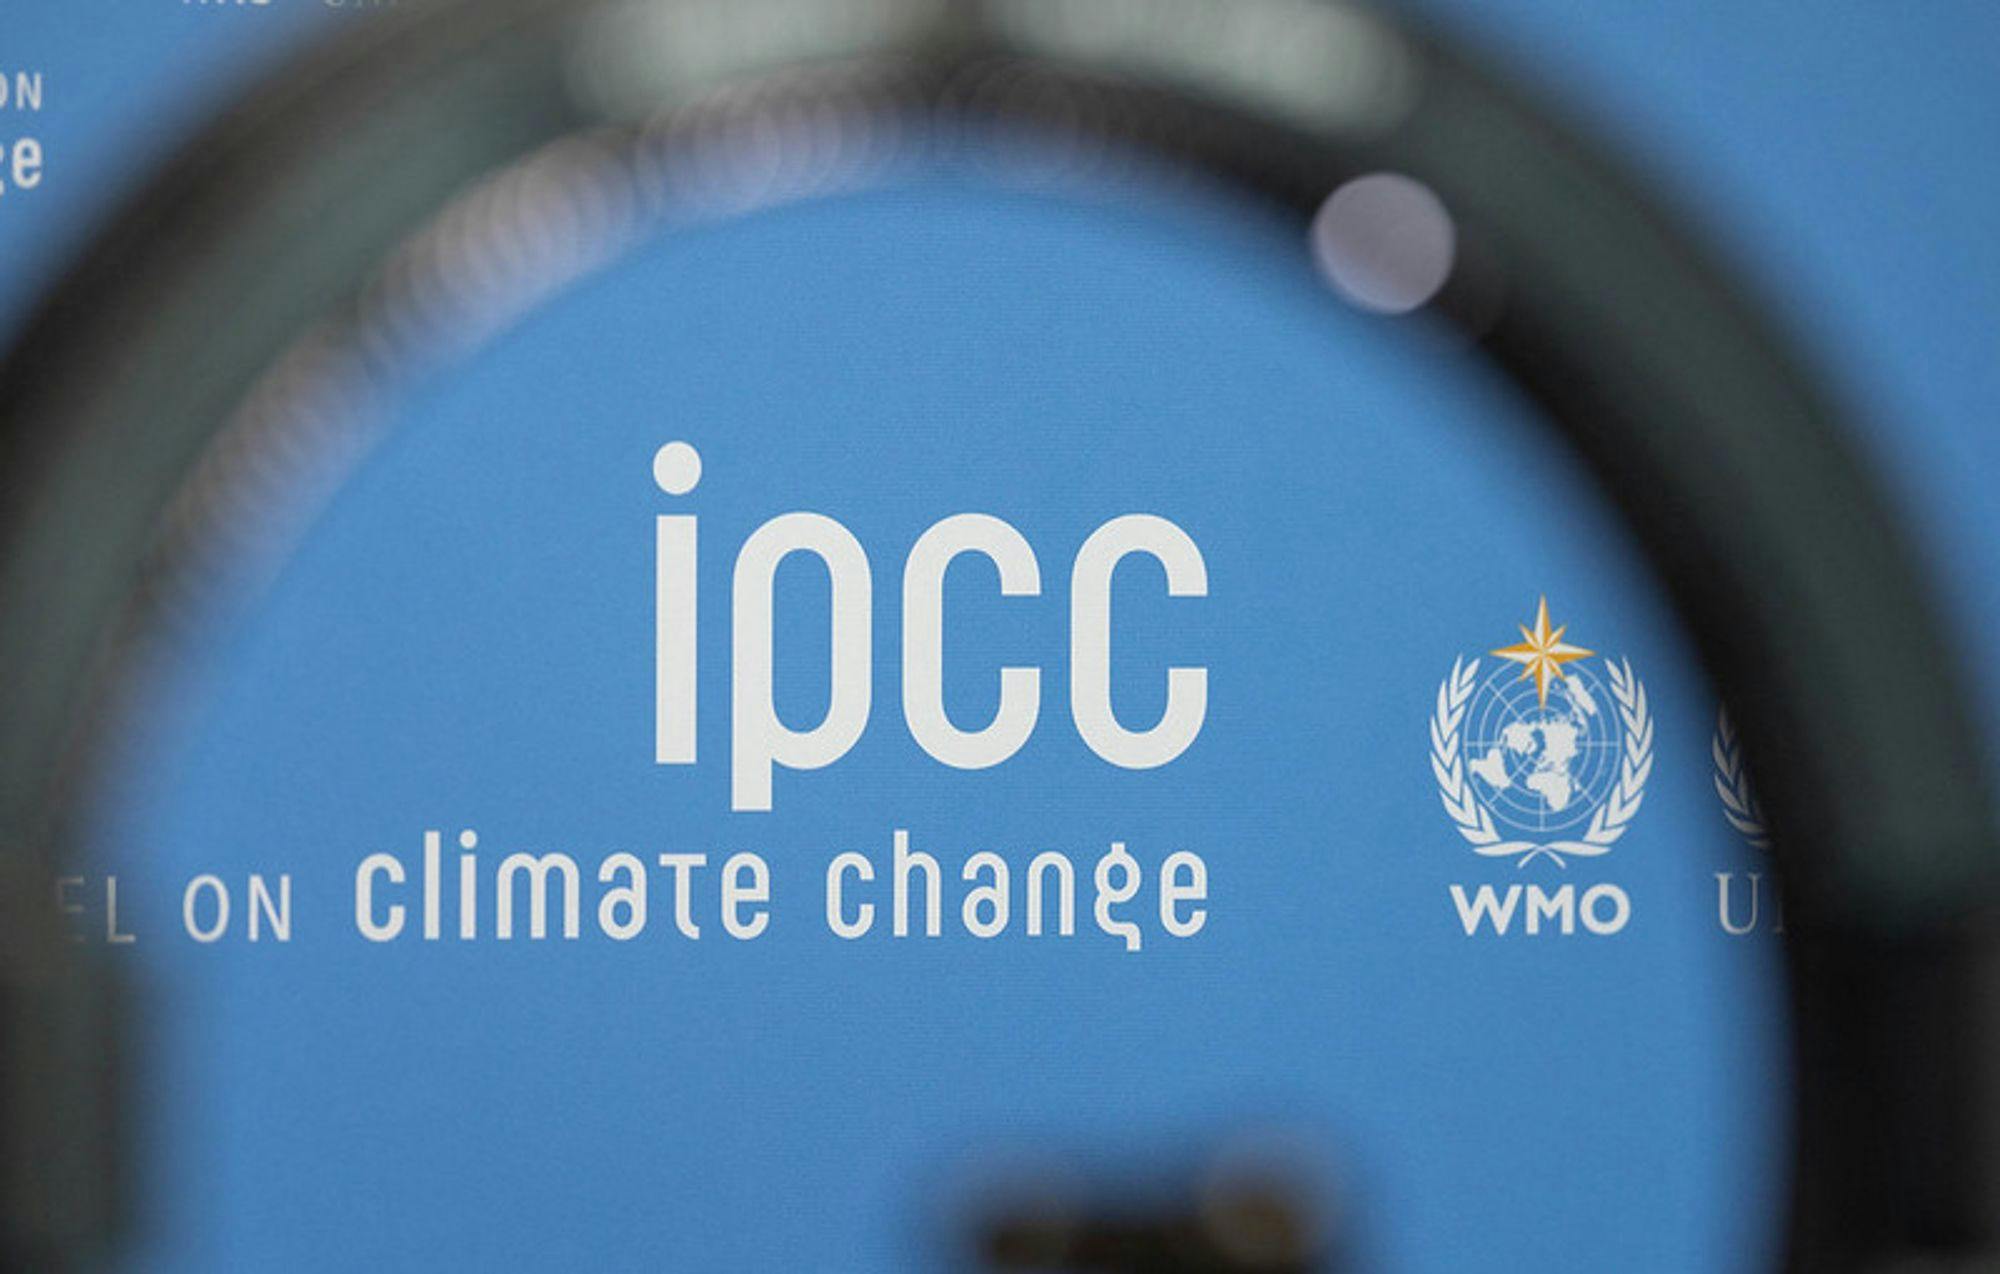 Showing the IPCC logo.